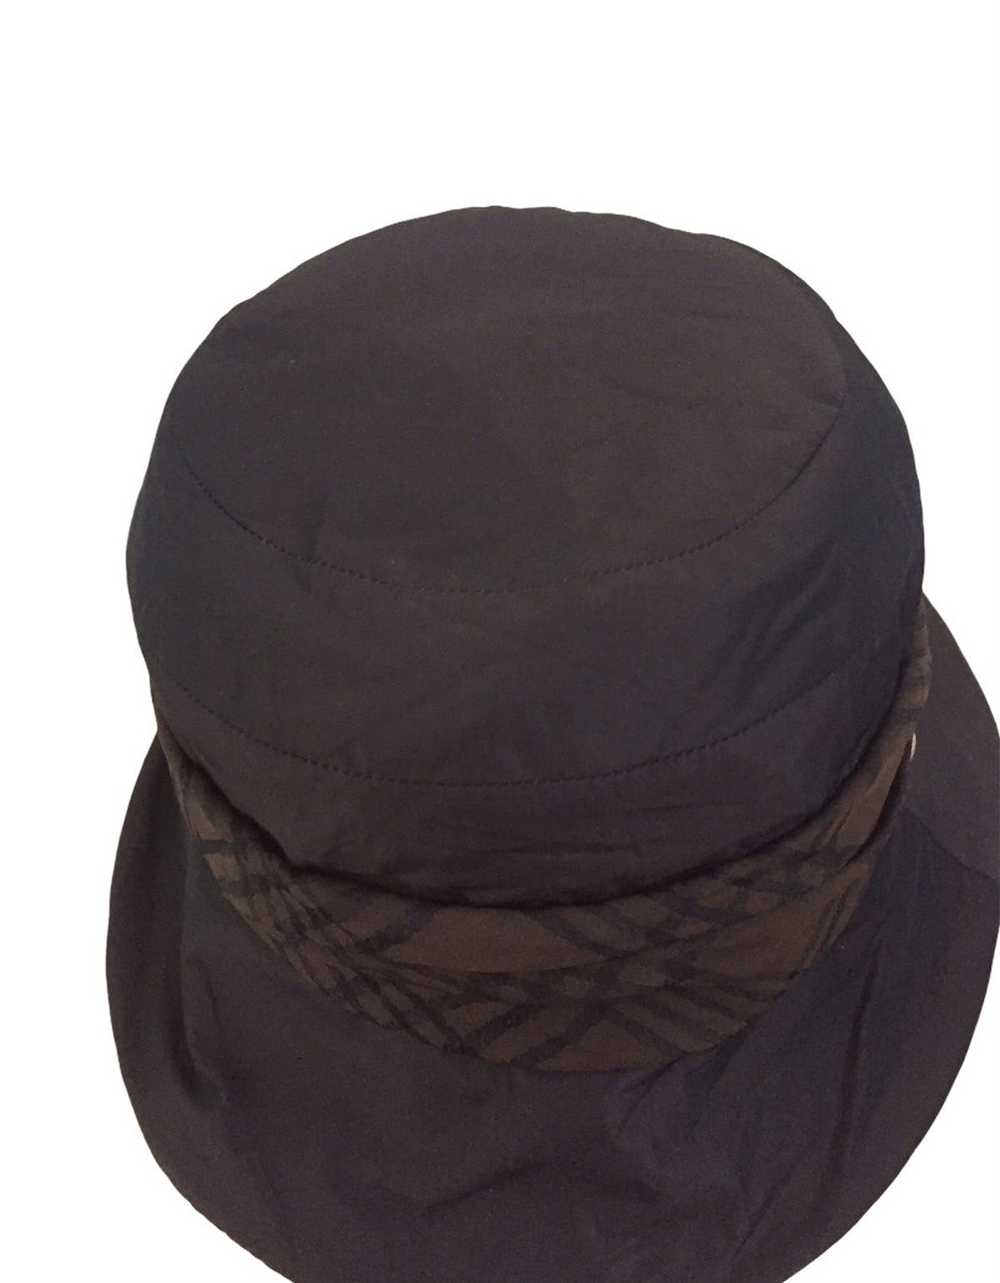 Lanvin Lanvin Collection Bucket Hat - image 3